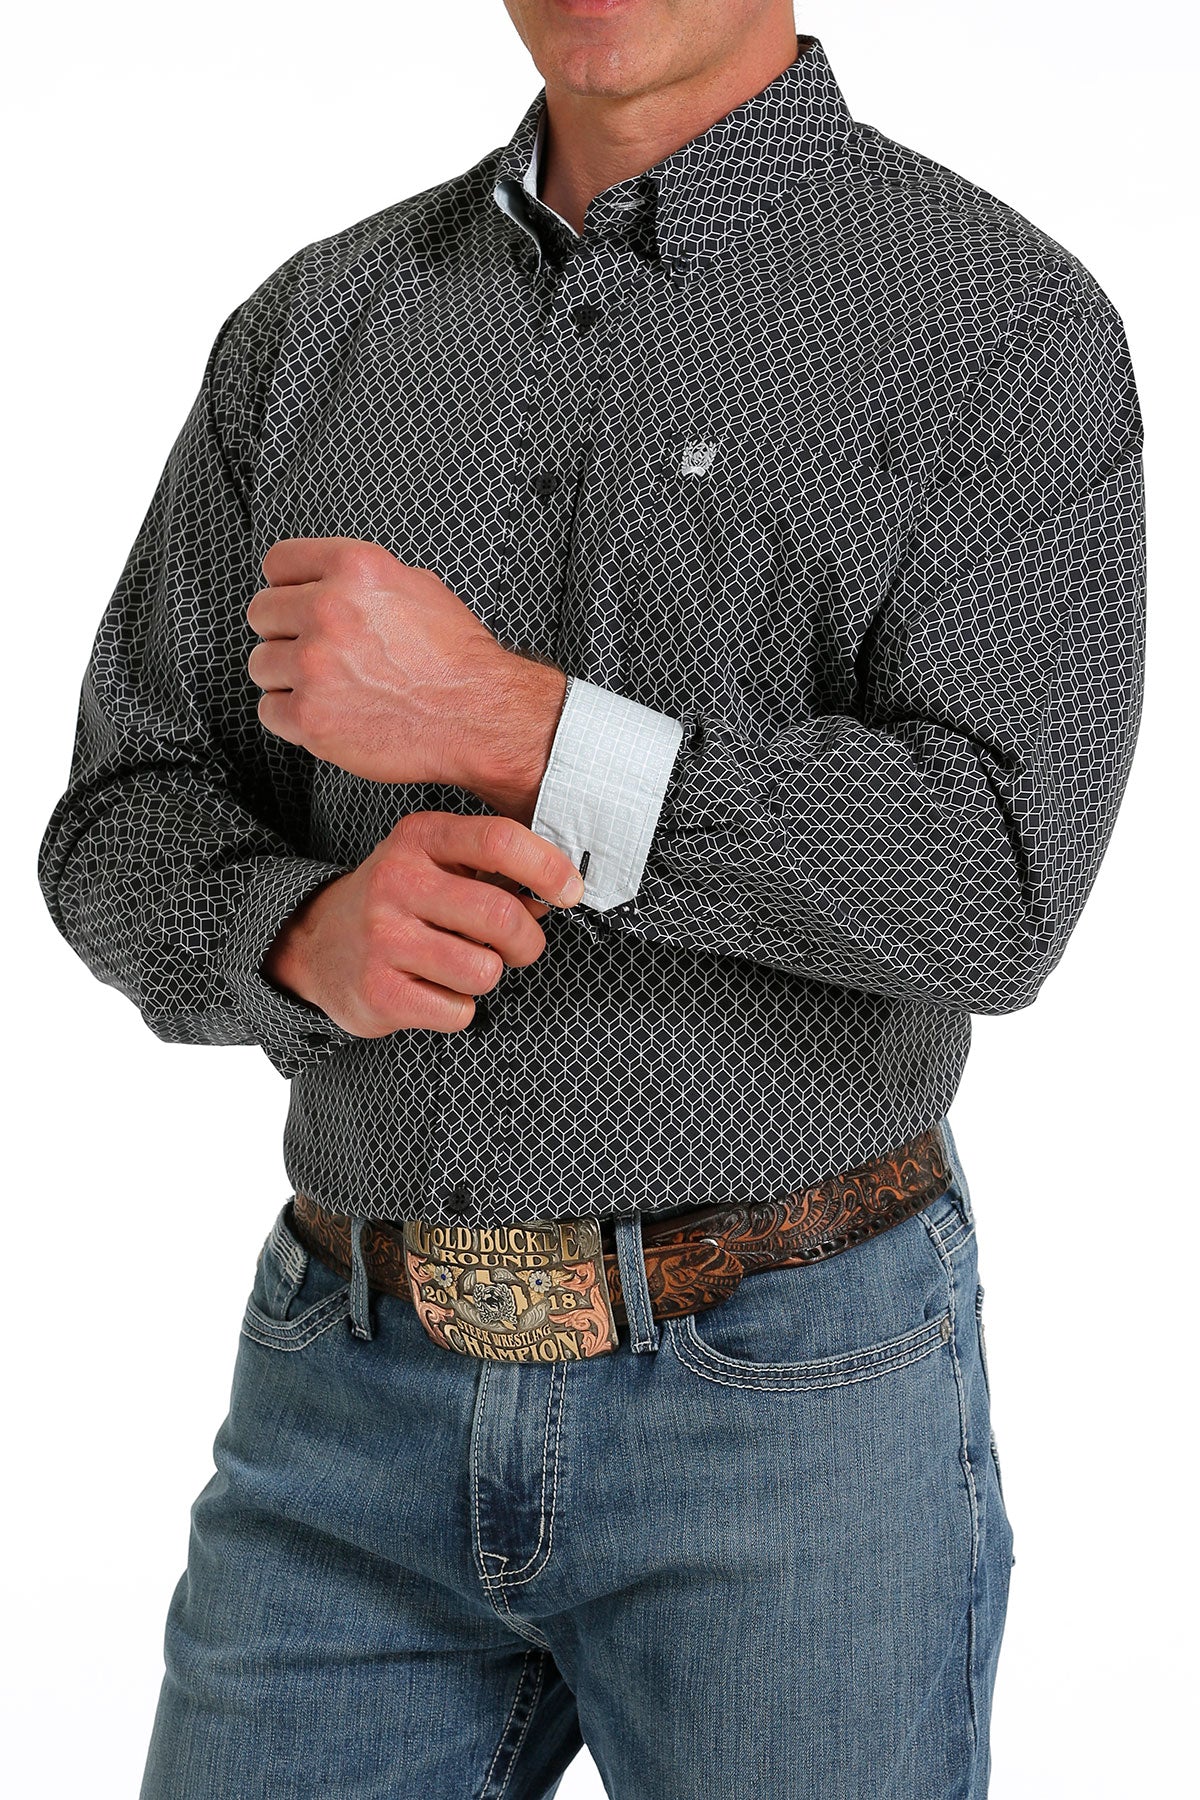 CINCH Men's Button Down Long Sleeve Western Shirt